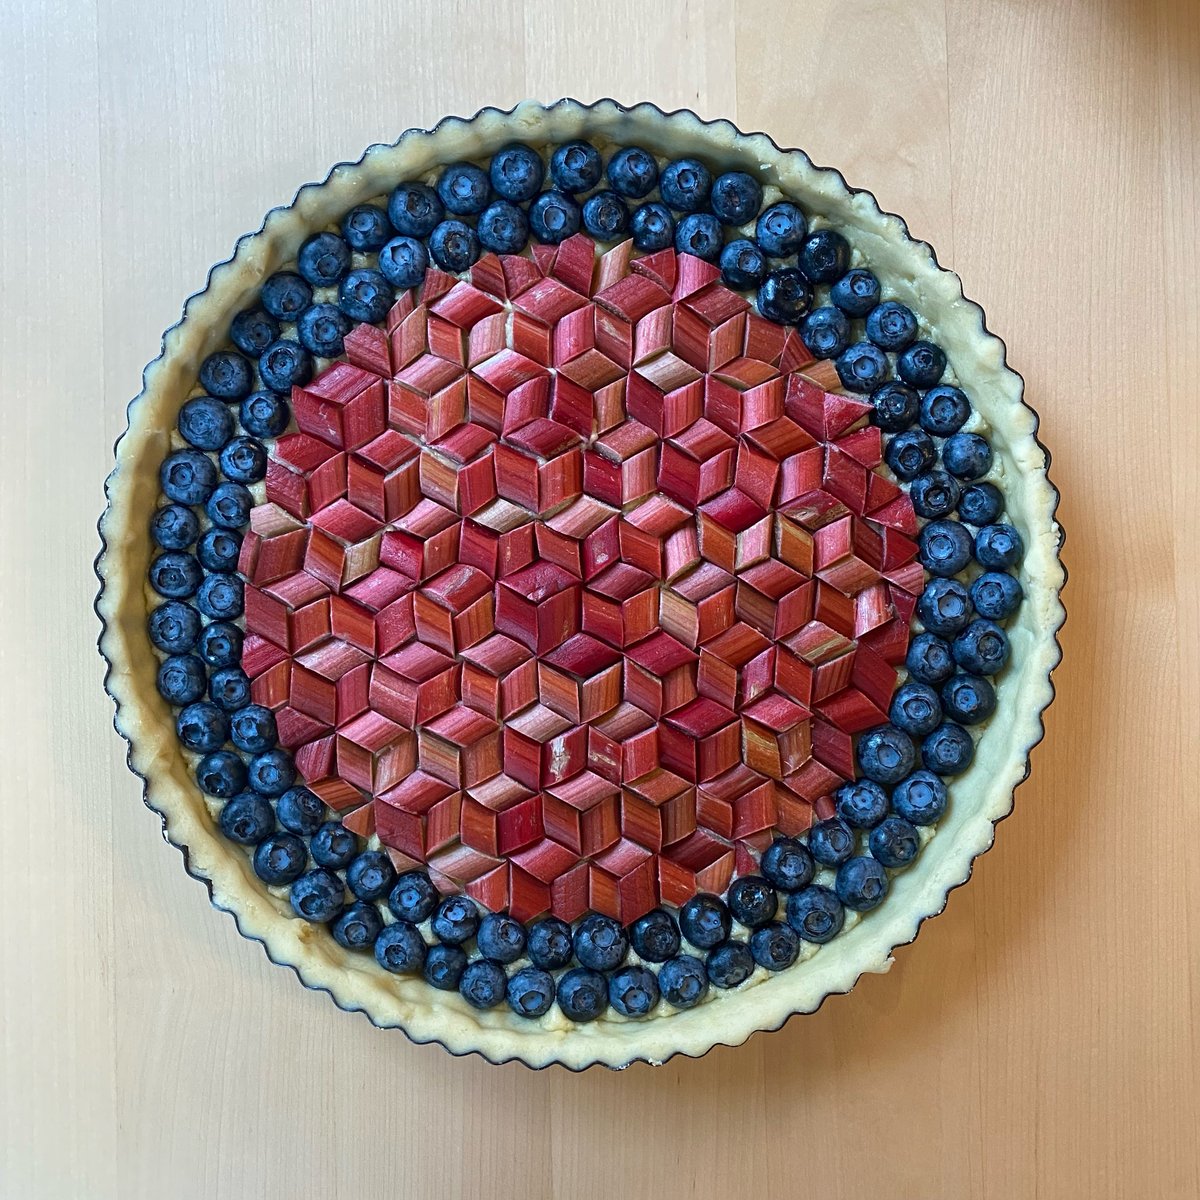 Our latest baking project. 

Rhubarb-blueberry frangipane tart.